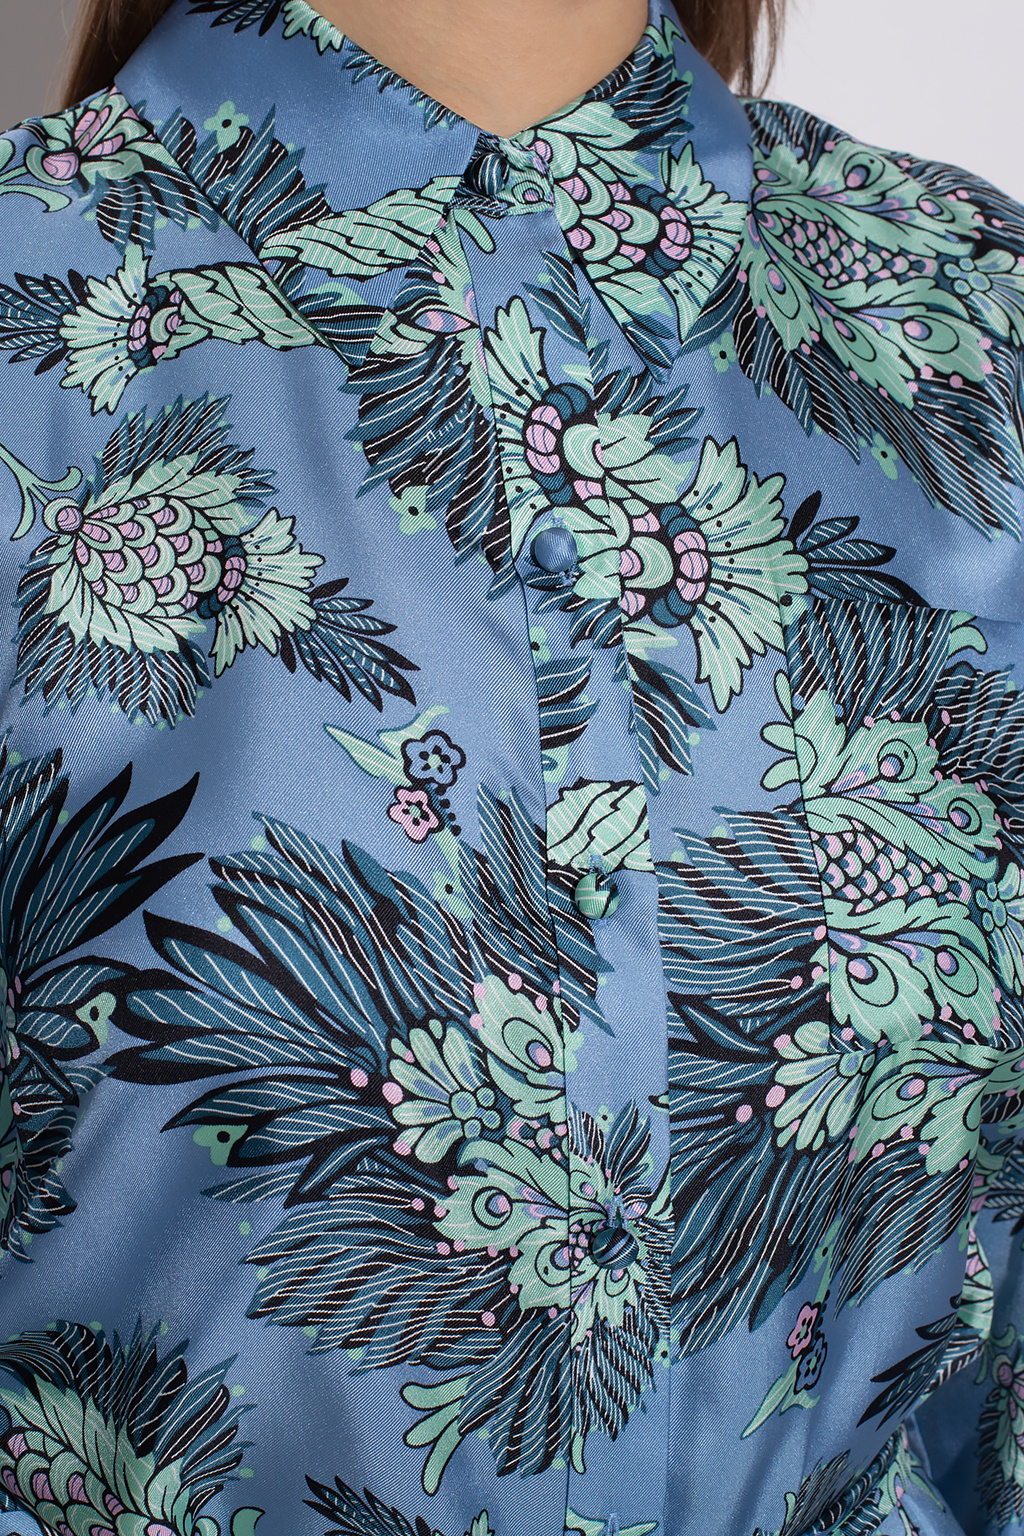 Covert Denim Jeans ‘Prita’ floral dress